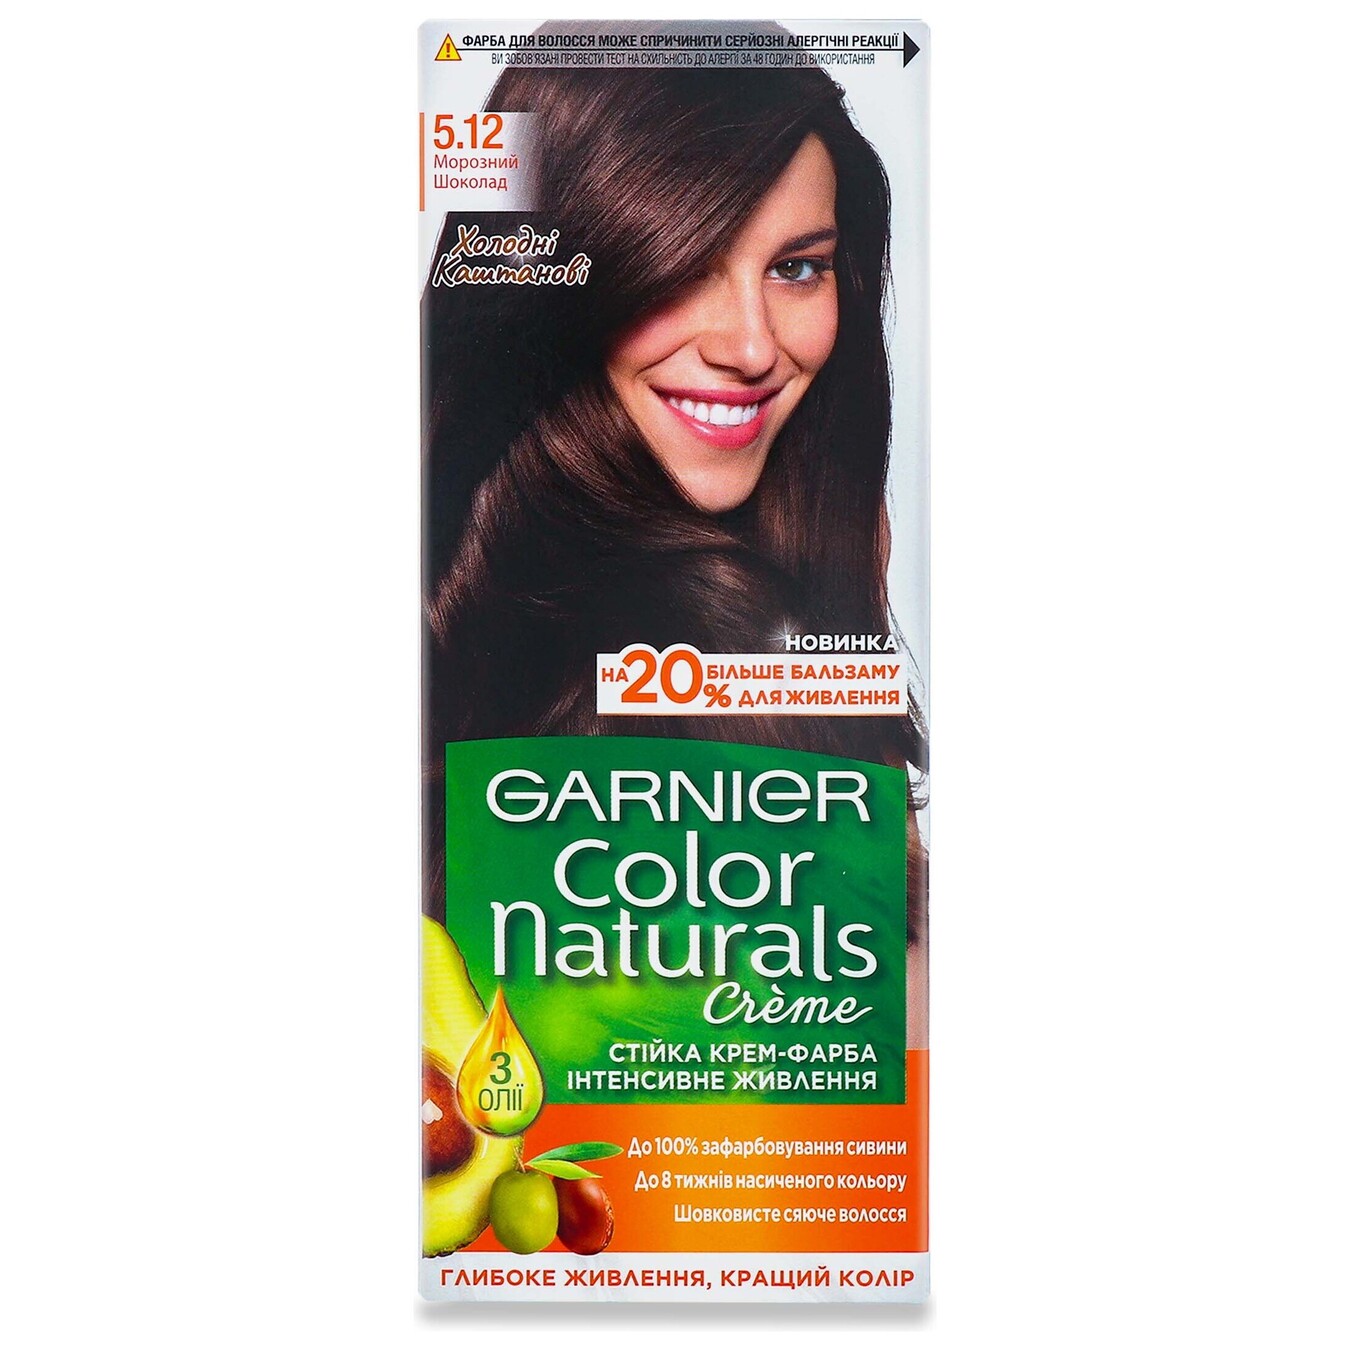 Paint Color Sensation intensive nourishment for hair tone 5.12 Frosty Chocolate